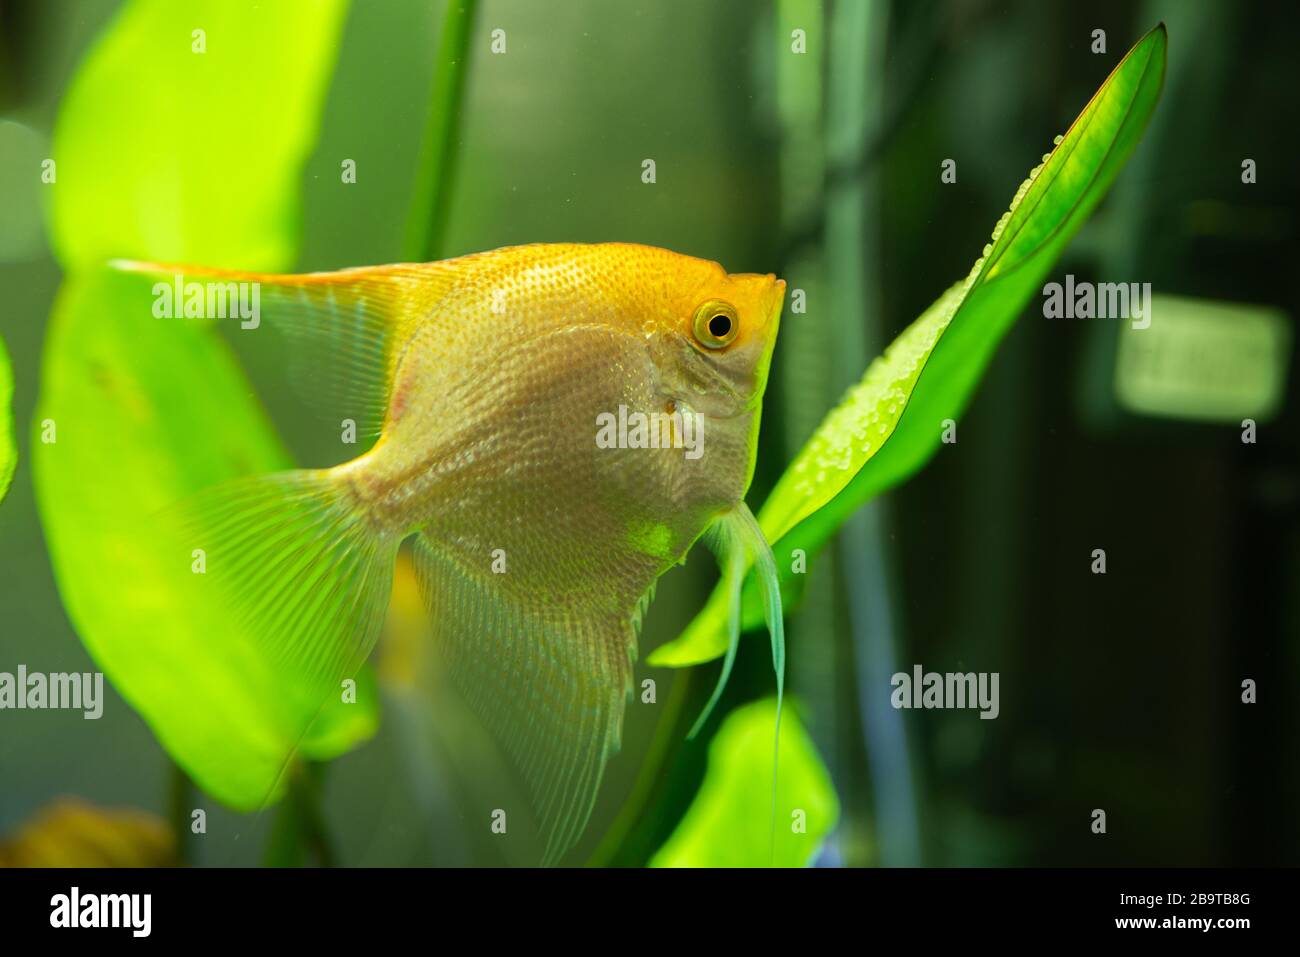 Gold Pterophyllum Scalare in aqarium water, yellow angelfish guarding eggs Stock Photo